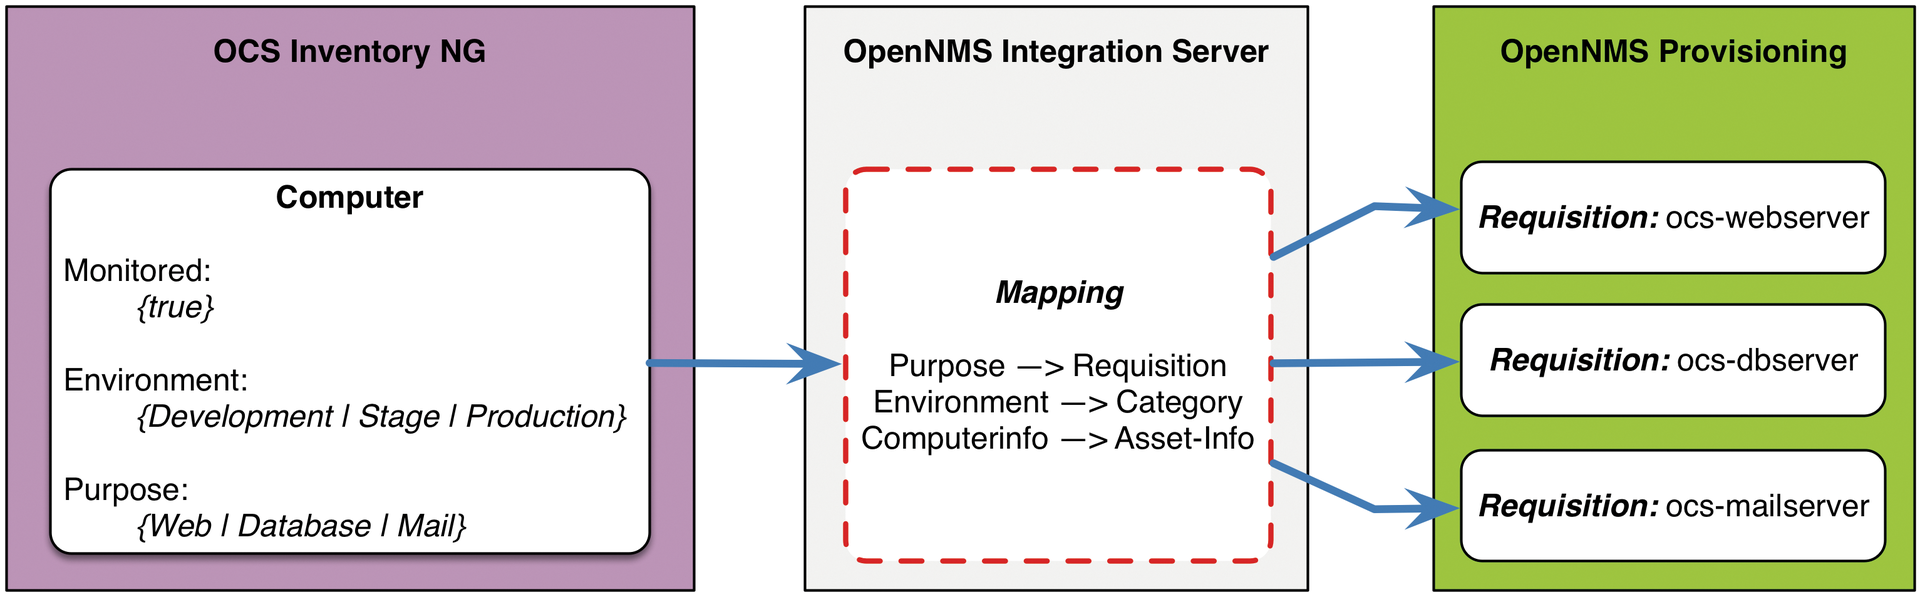 Converting an OCS computer to an OpenNMS requisition. 